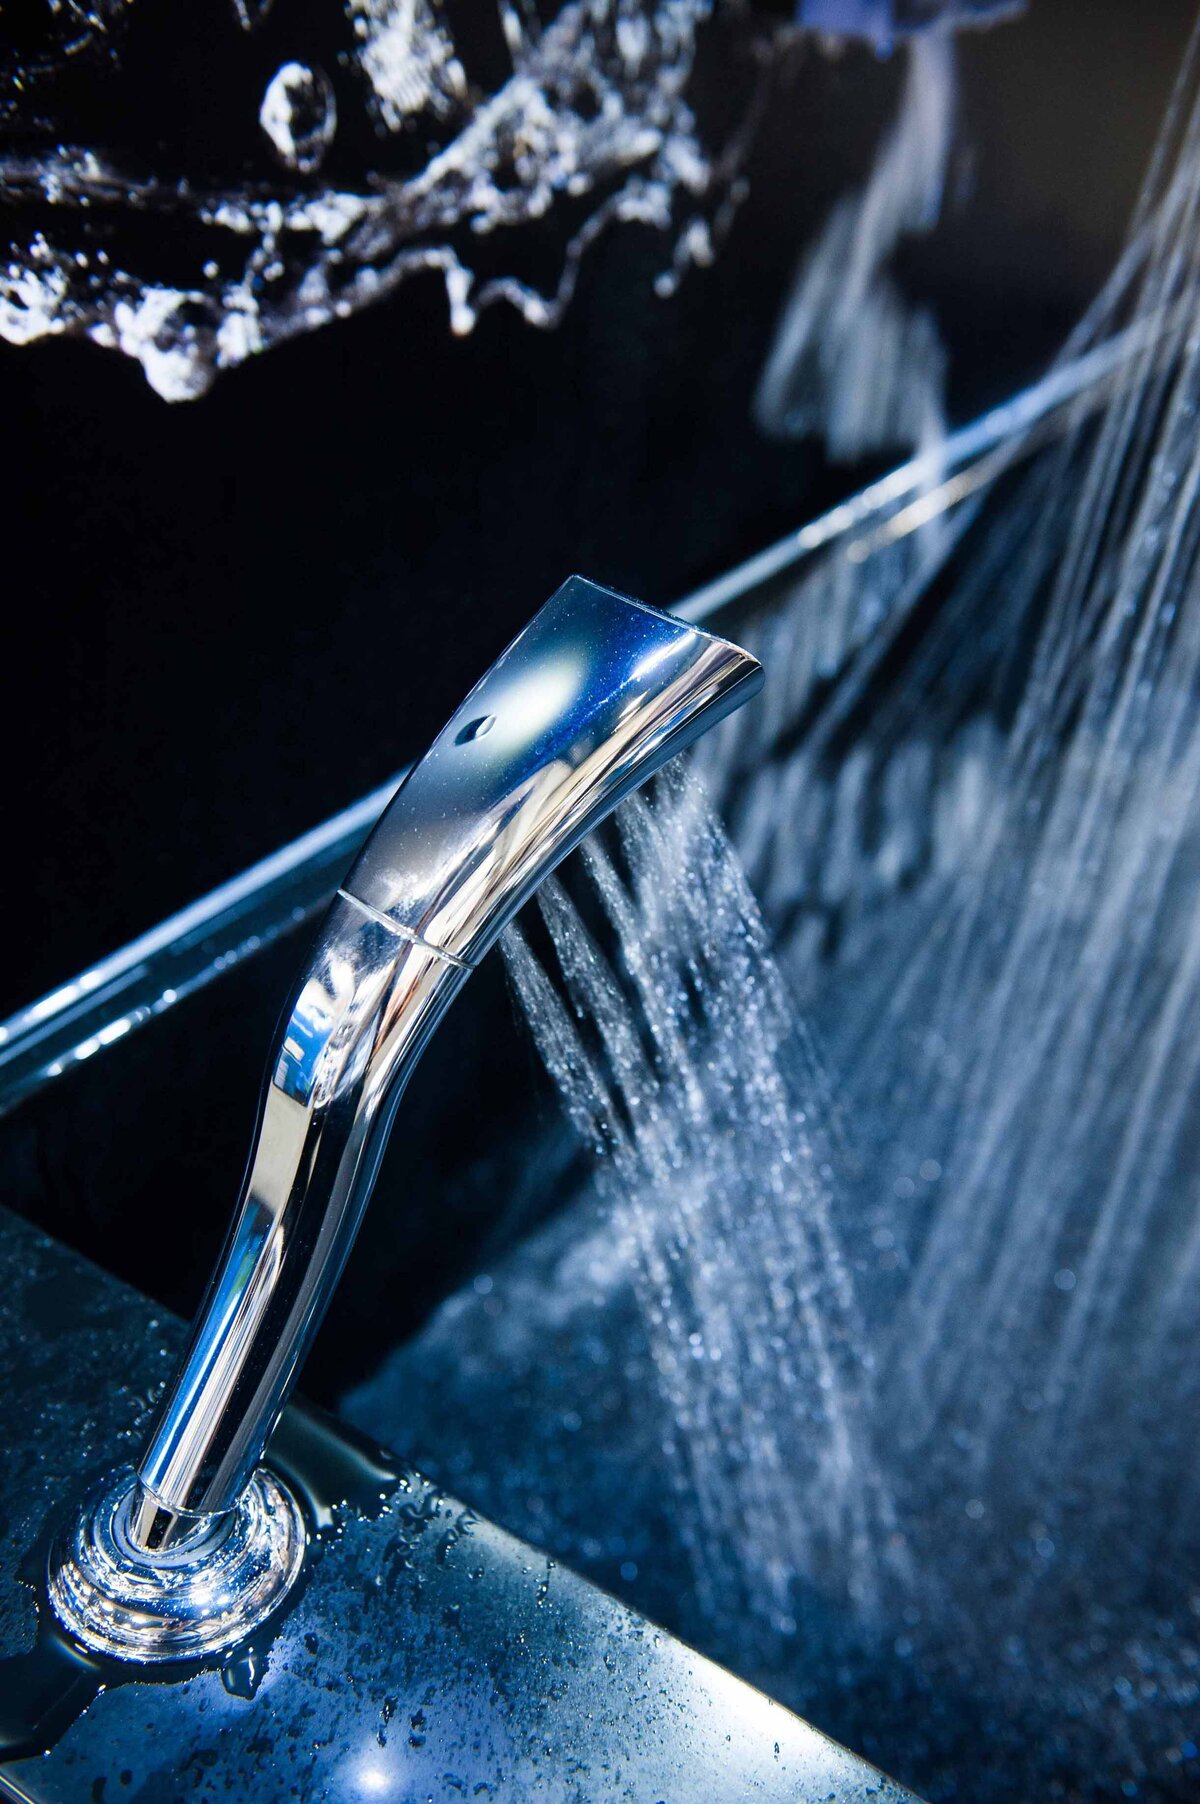 shower head marketing image for Kohler  spraying water